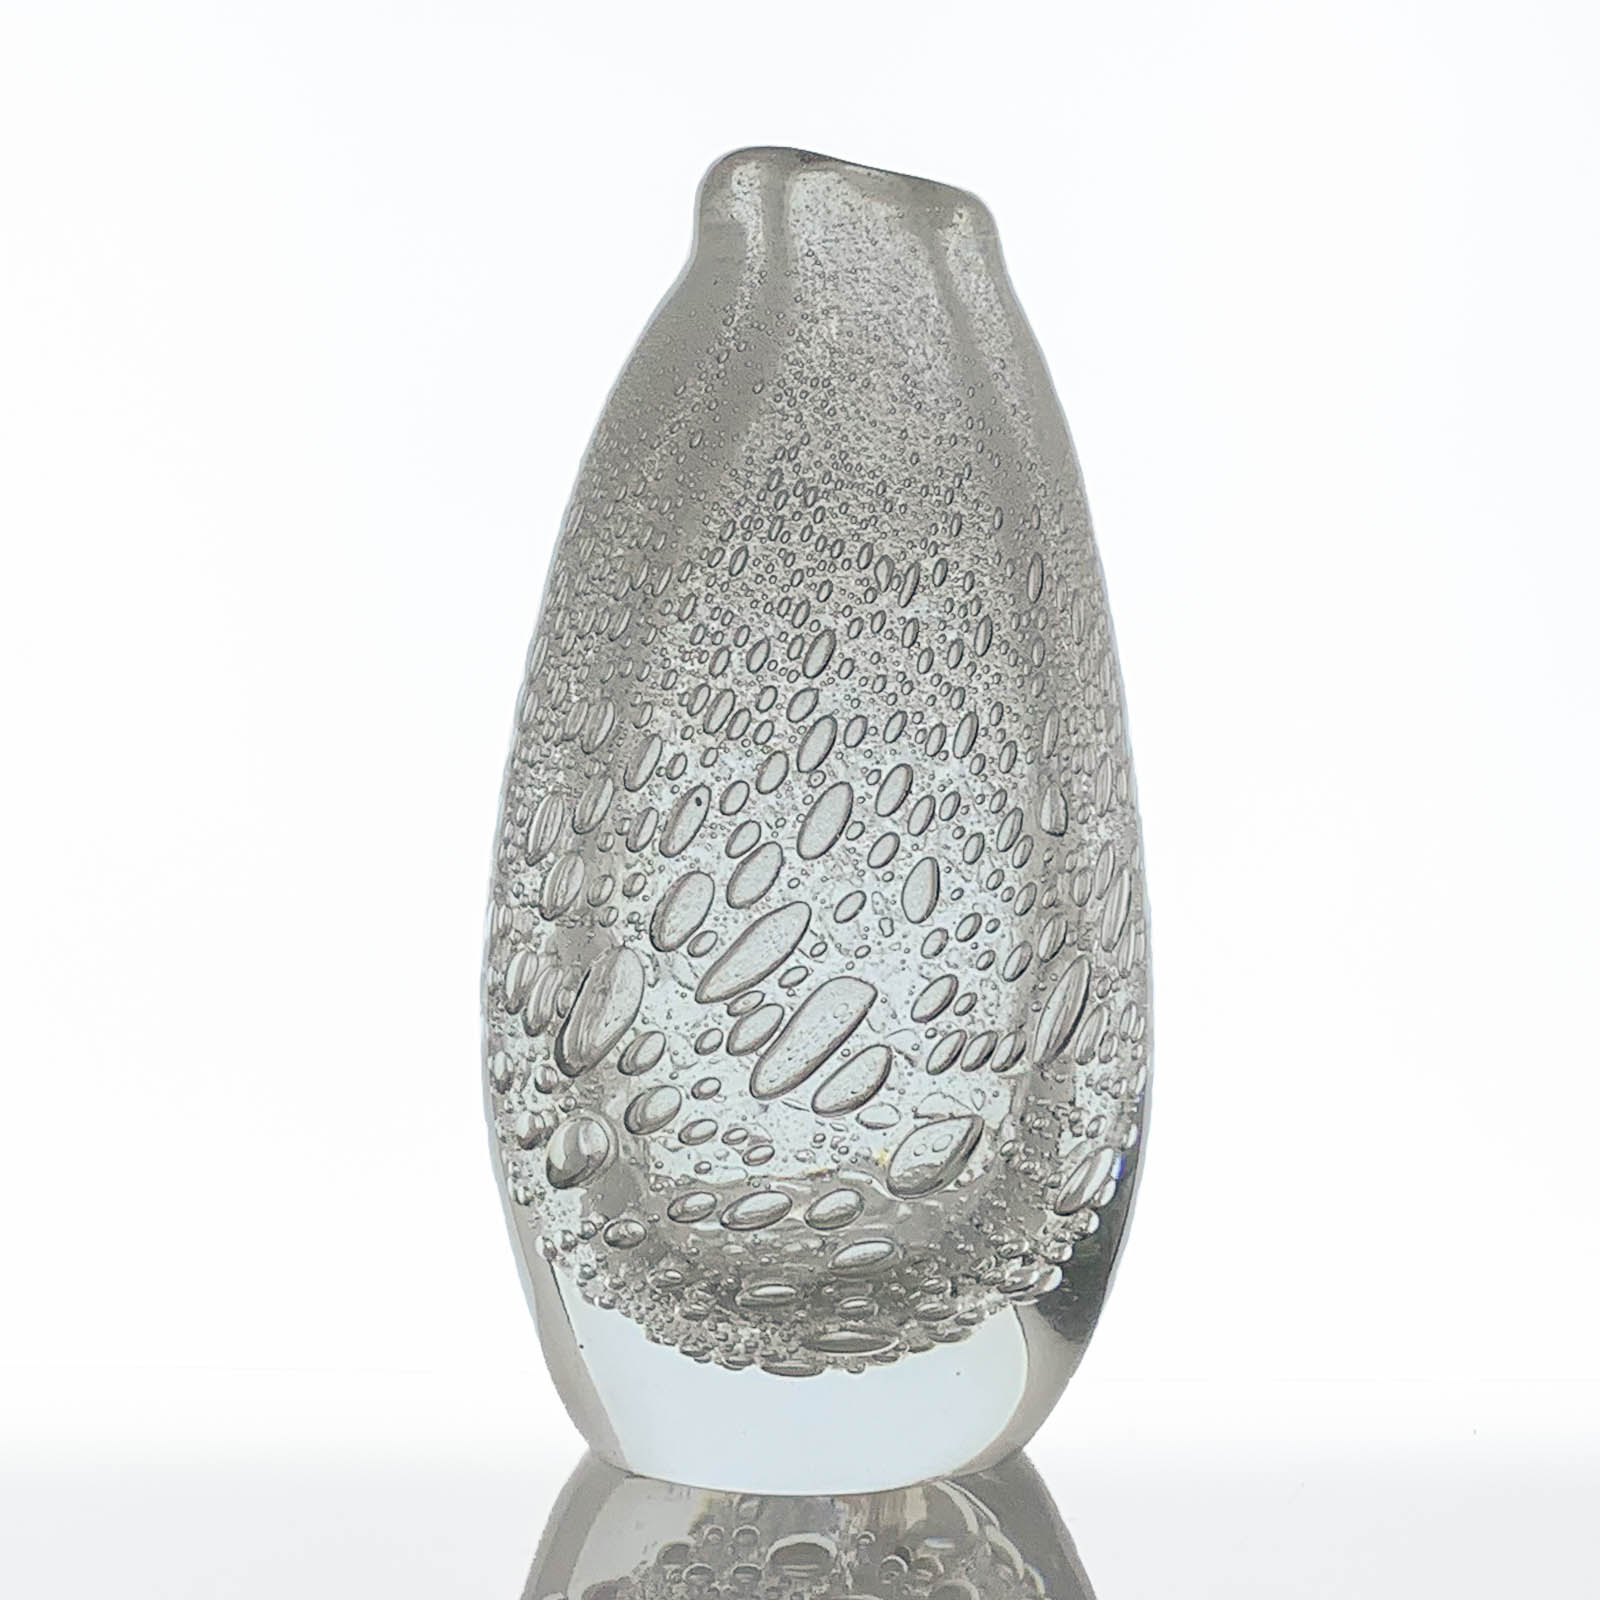 Tapio Wirkkala - Crystal Art-Object with sodium bubbles, model 3234 - Iittala, Finland circa 1948